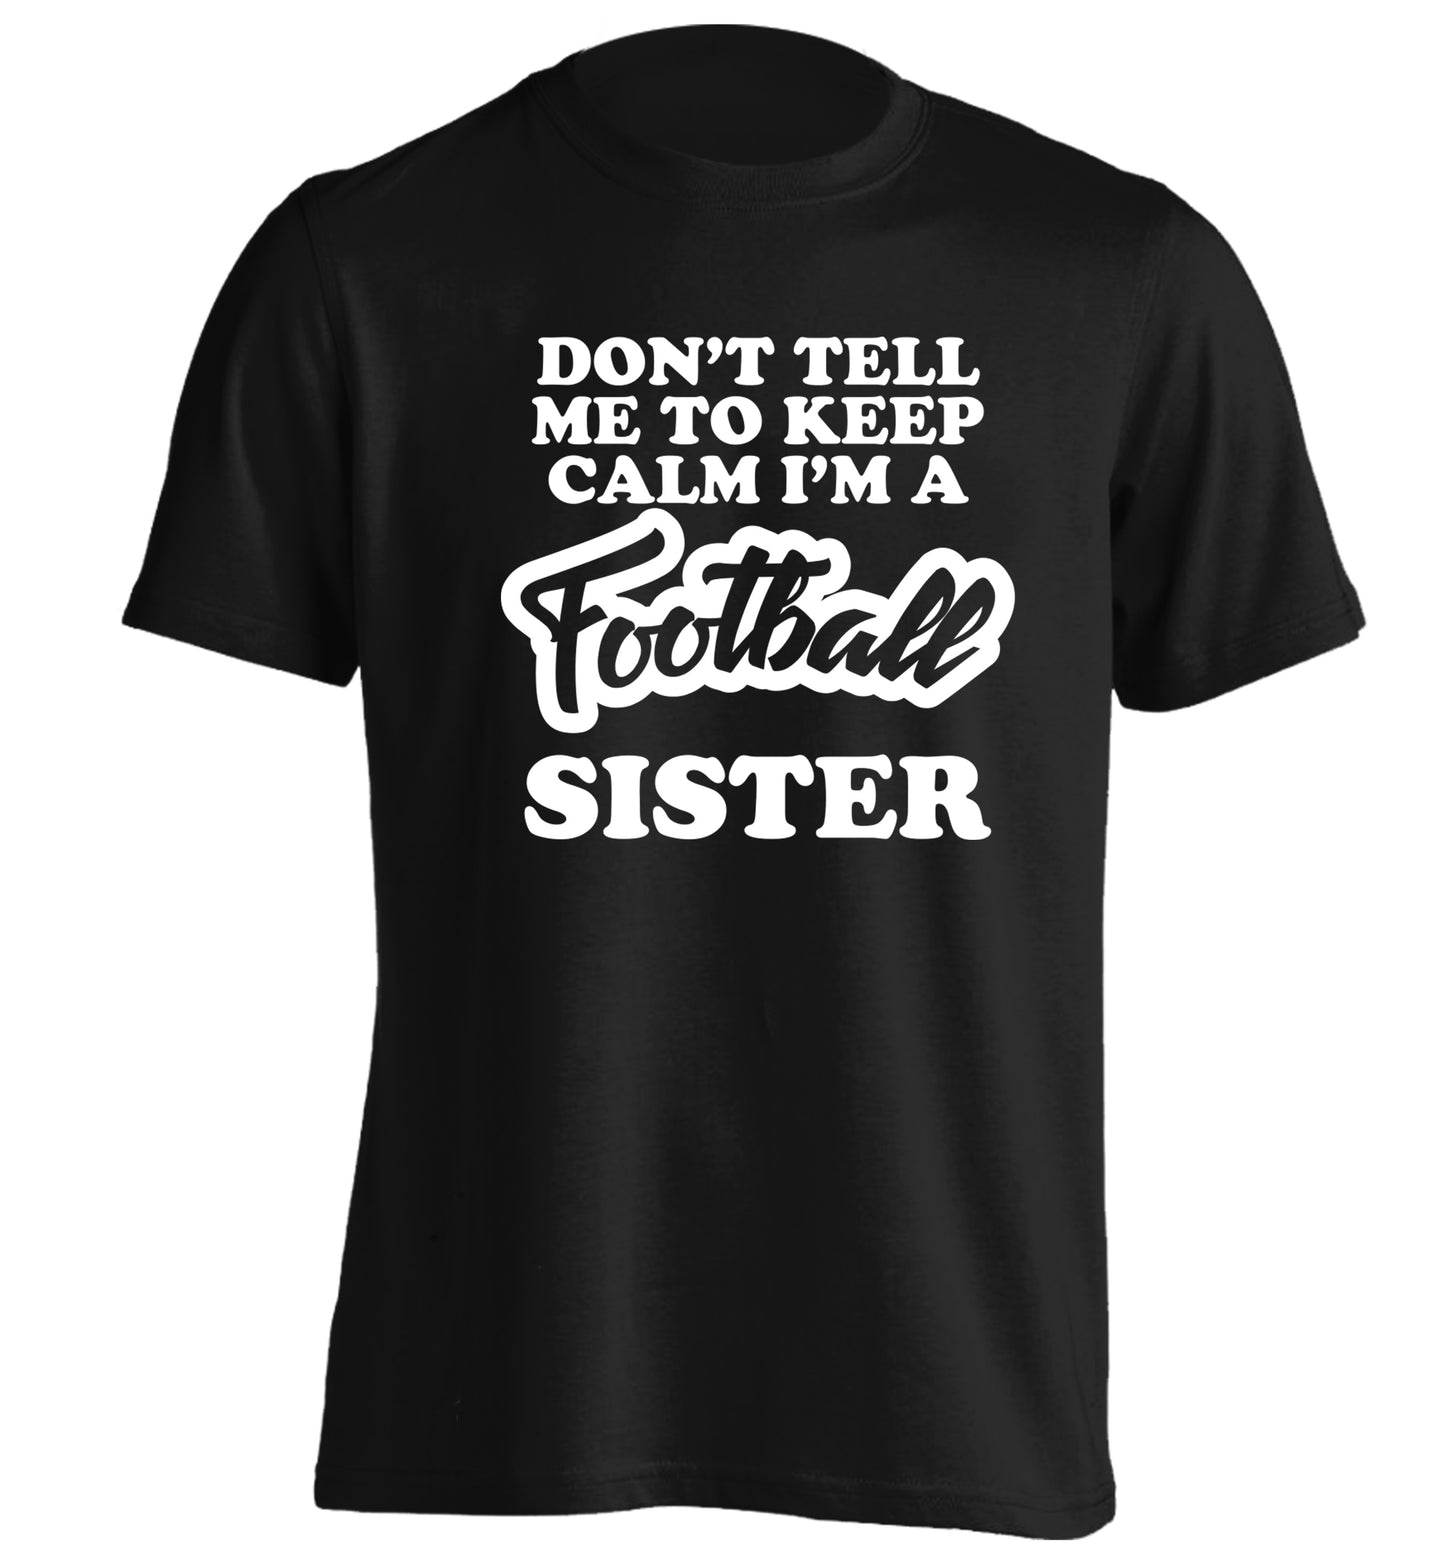 Don't tell me to keep calm I'm a football sister adults unisexblack Tshirt 2XL